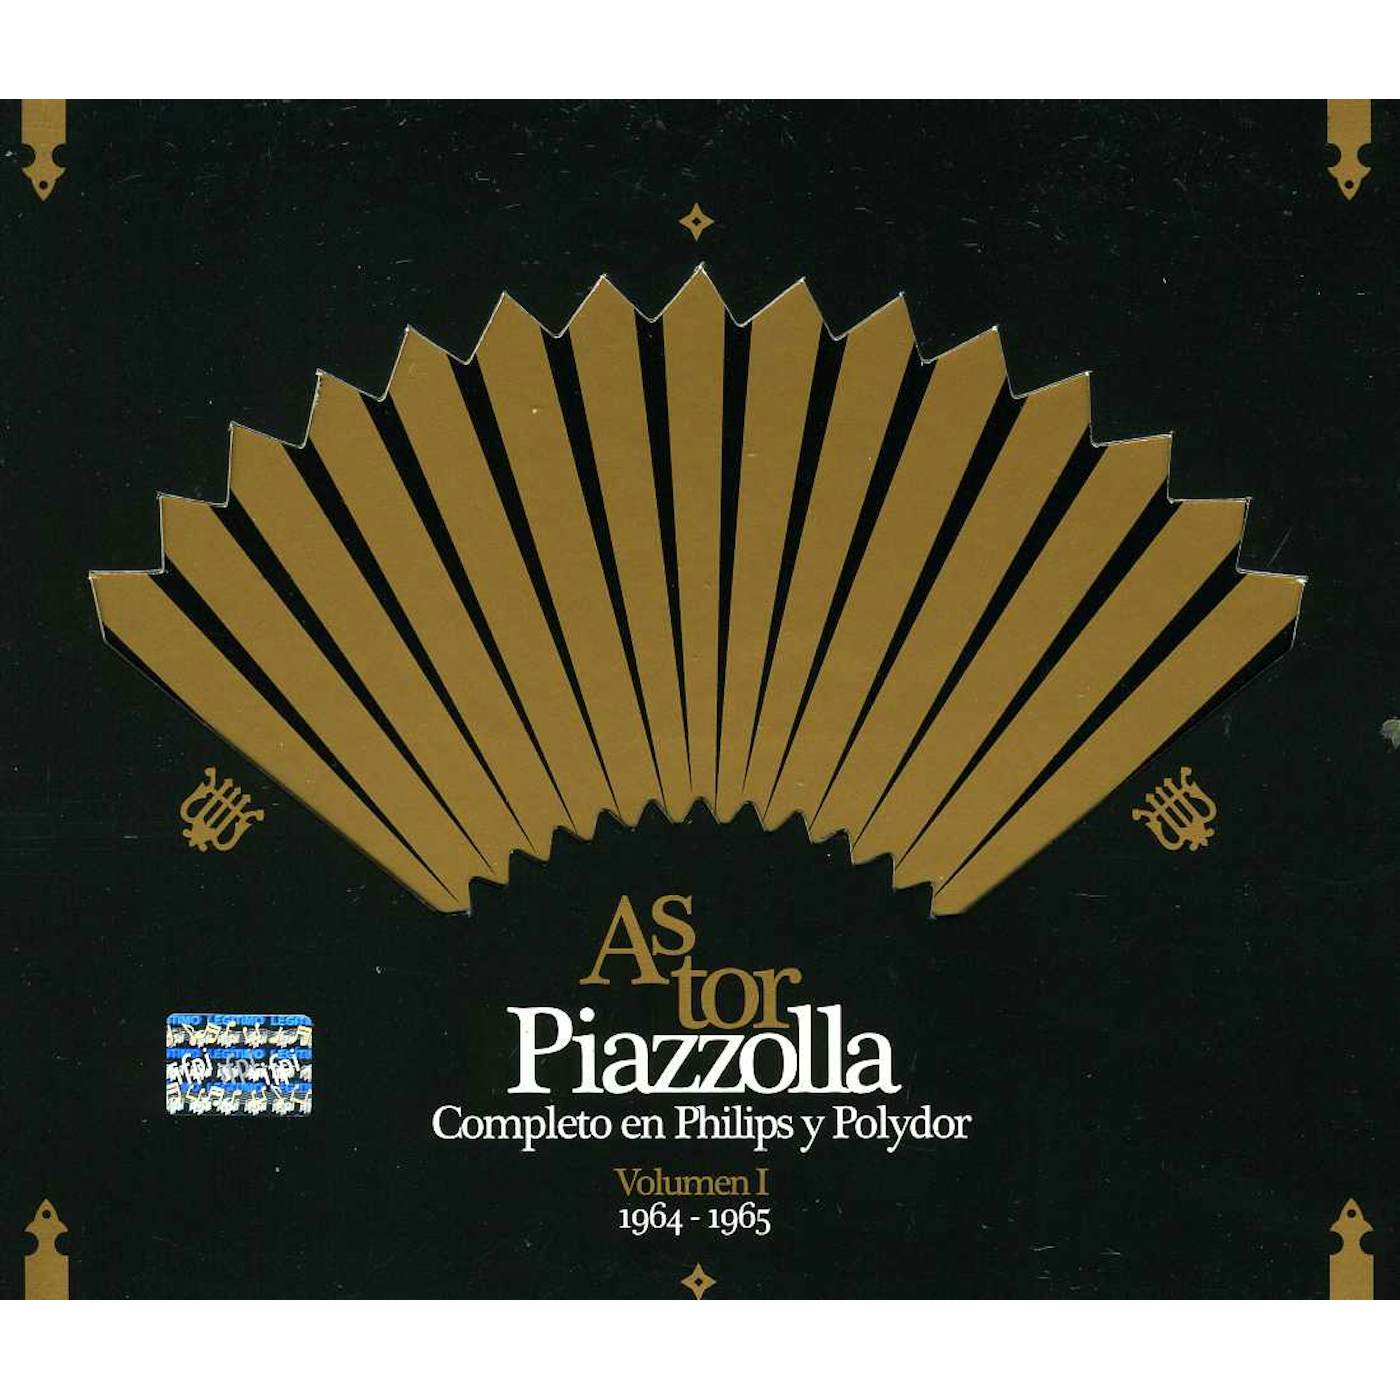 Astor Piazzolla VOL 1: 1964 - 1965 CD